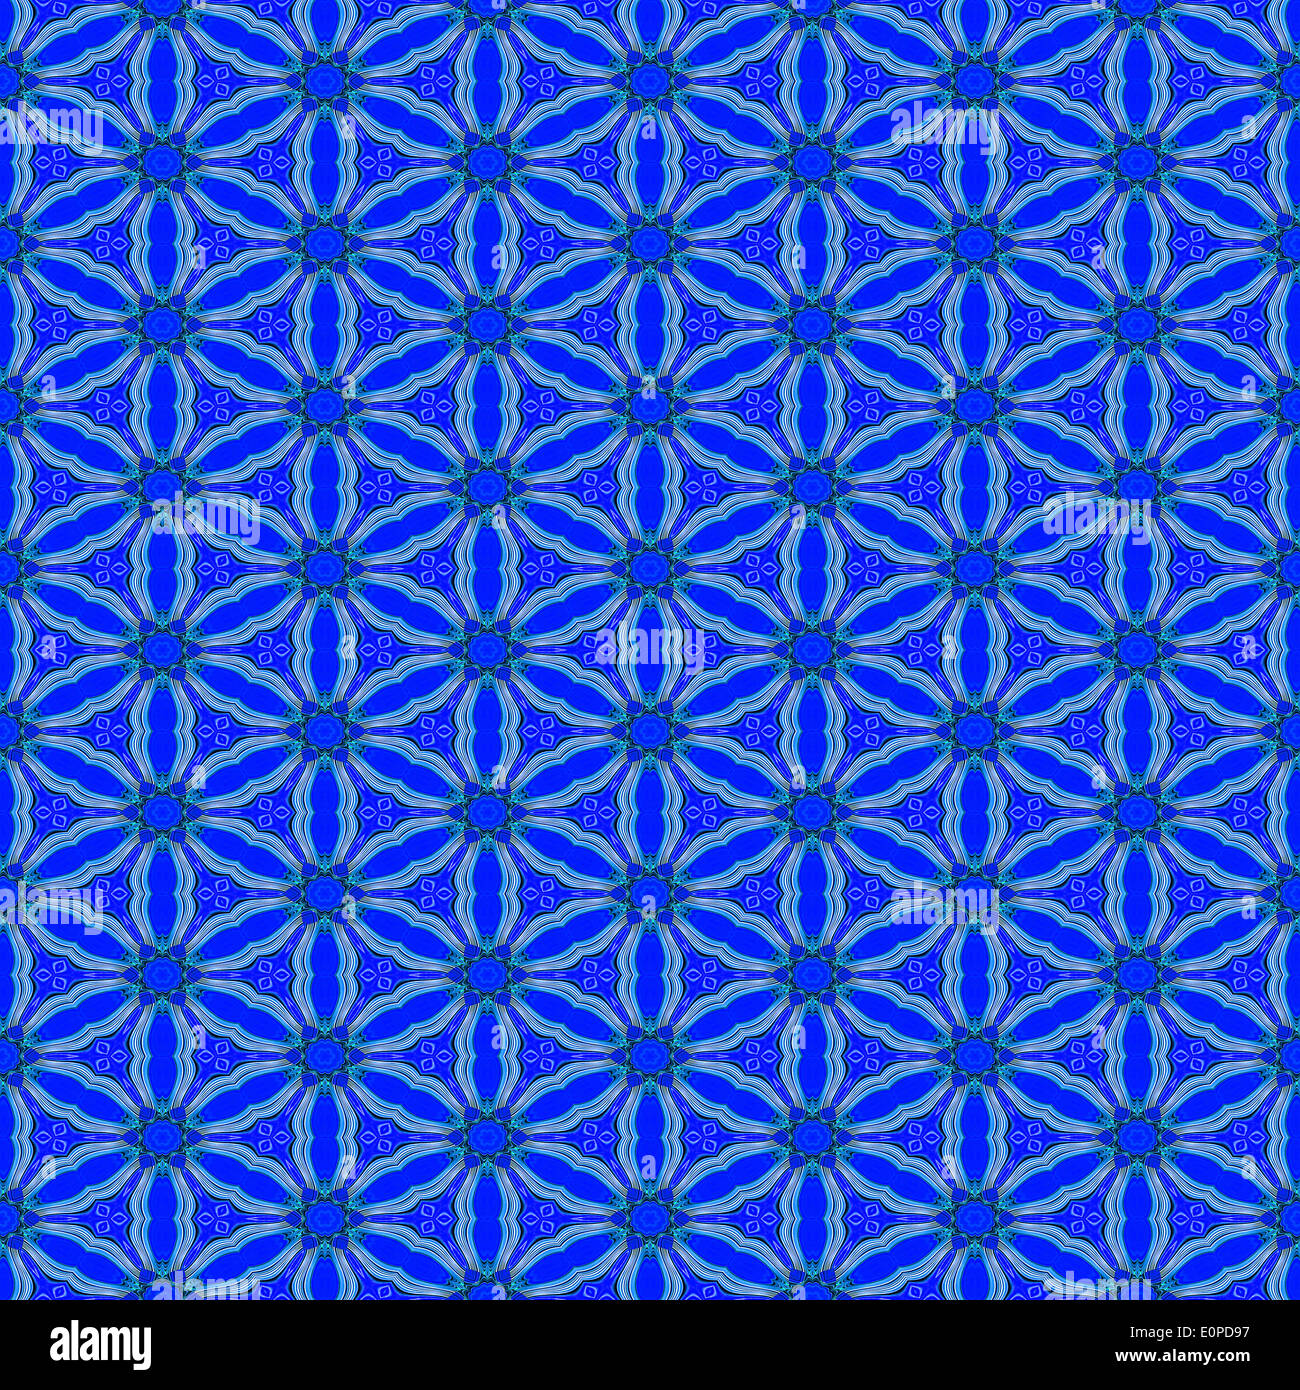 Seamless blue floral pattern - art nouveau style Stock Photo